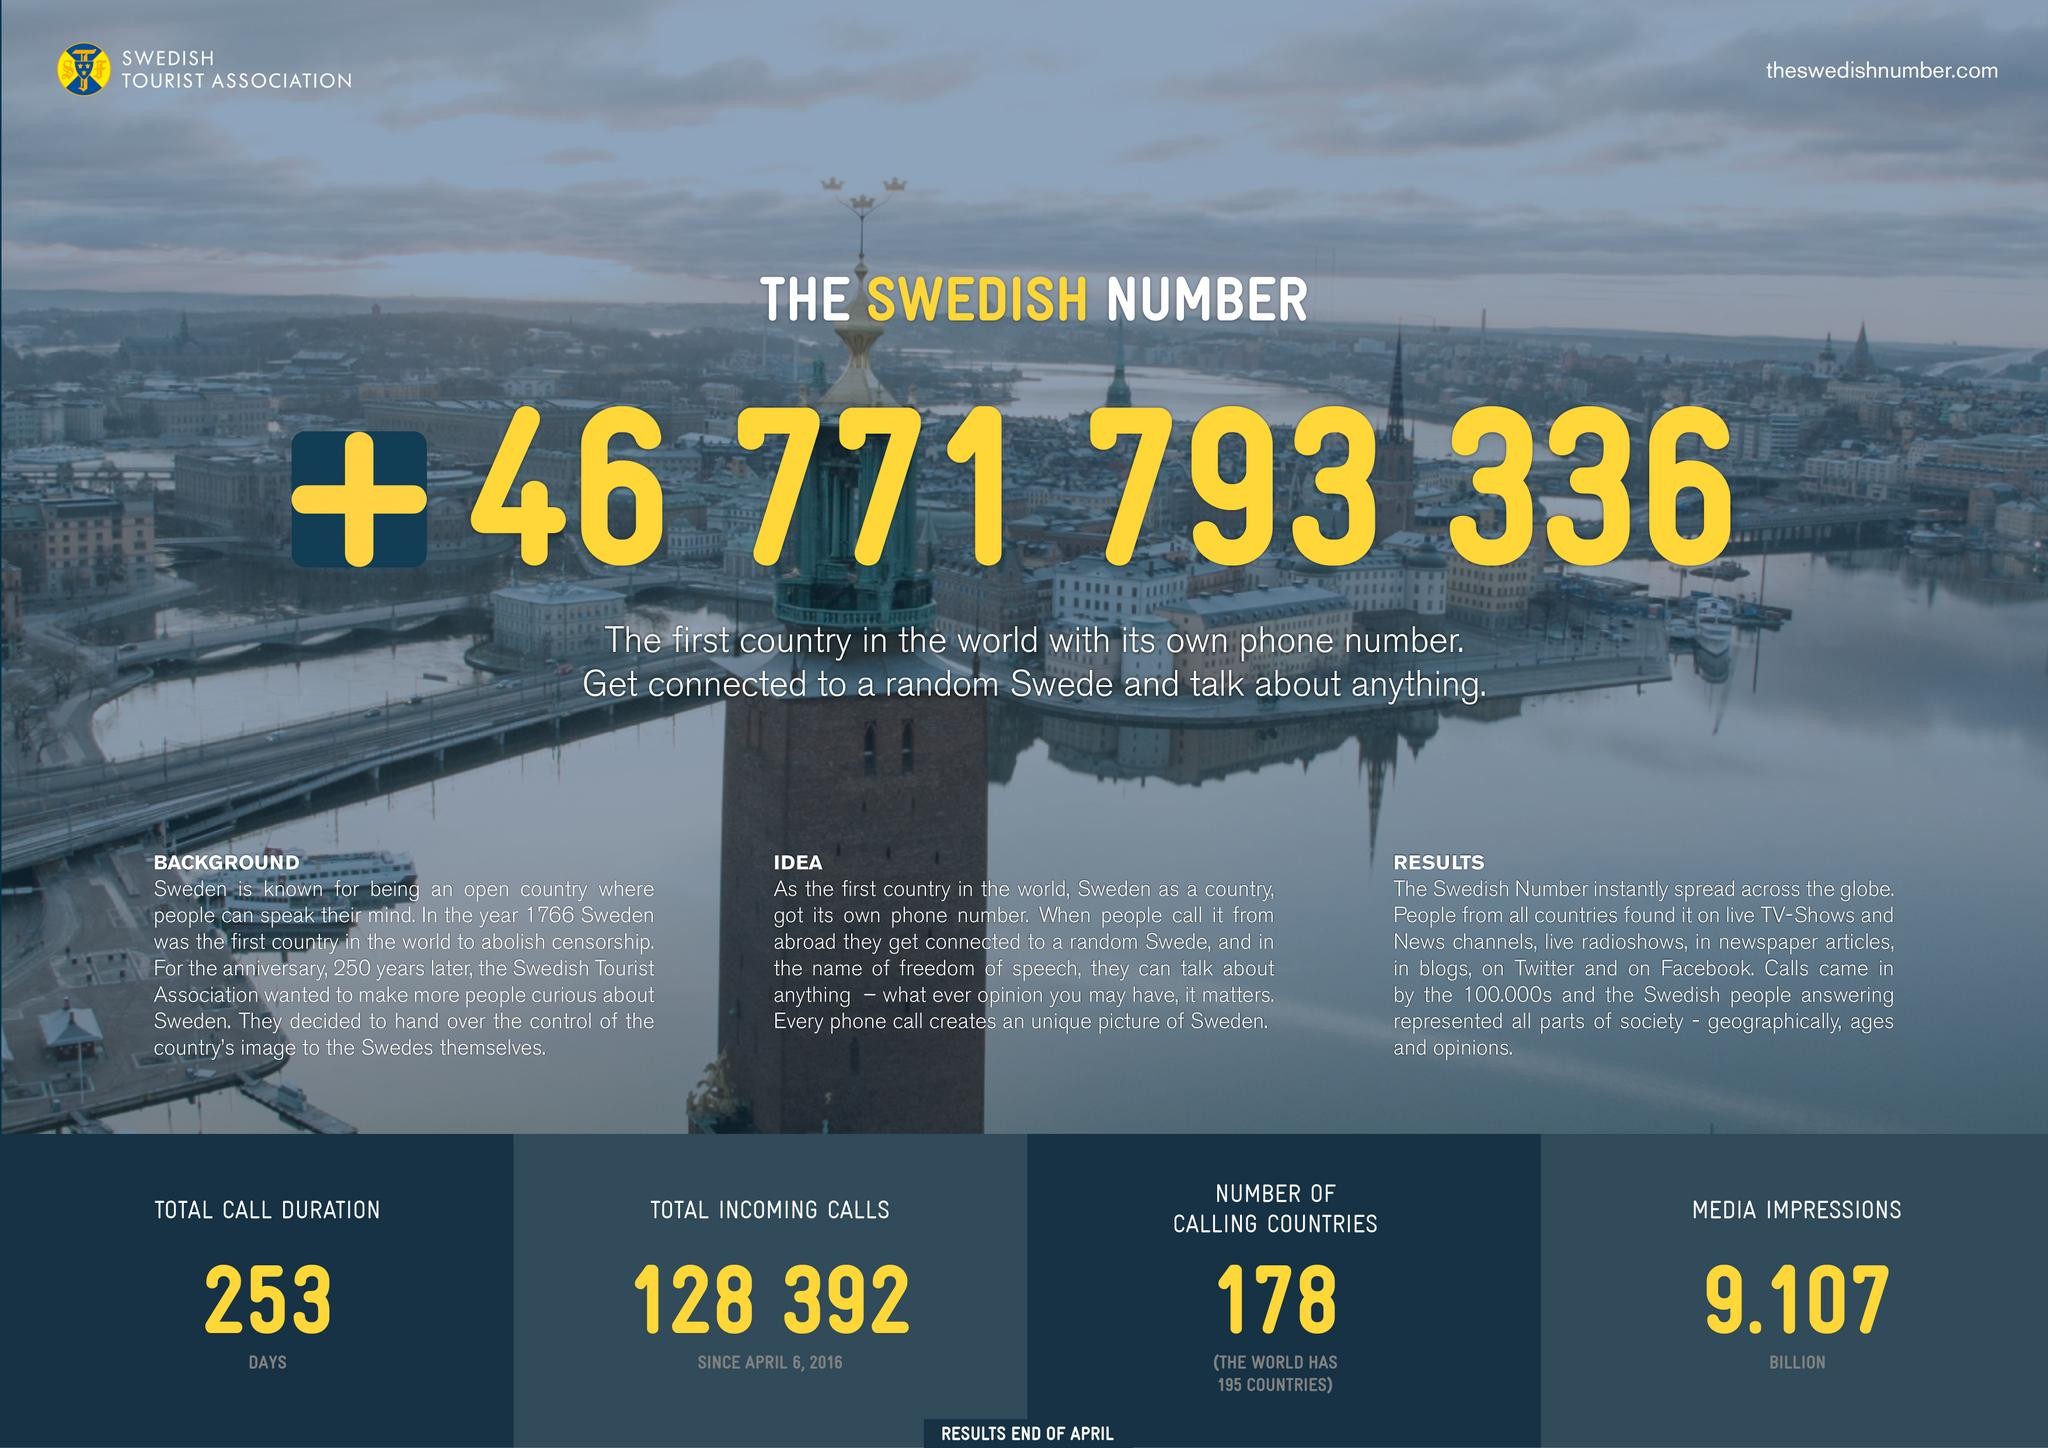 THE SWEDISH NUMBER